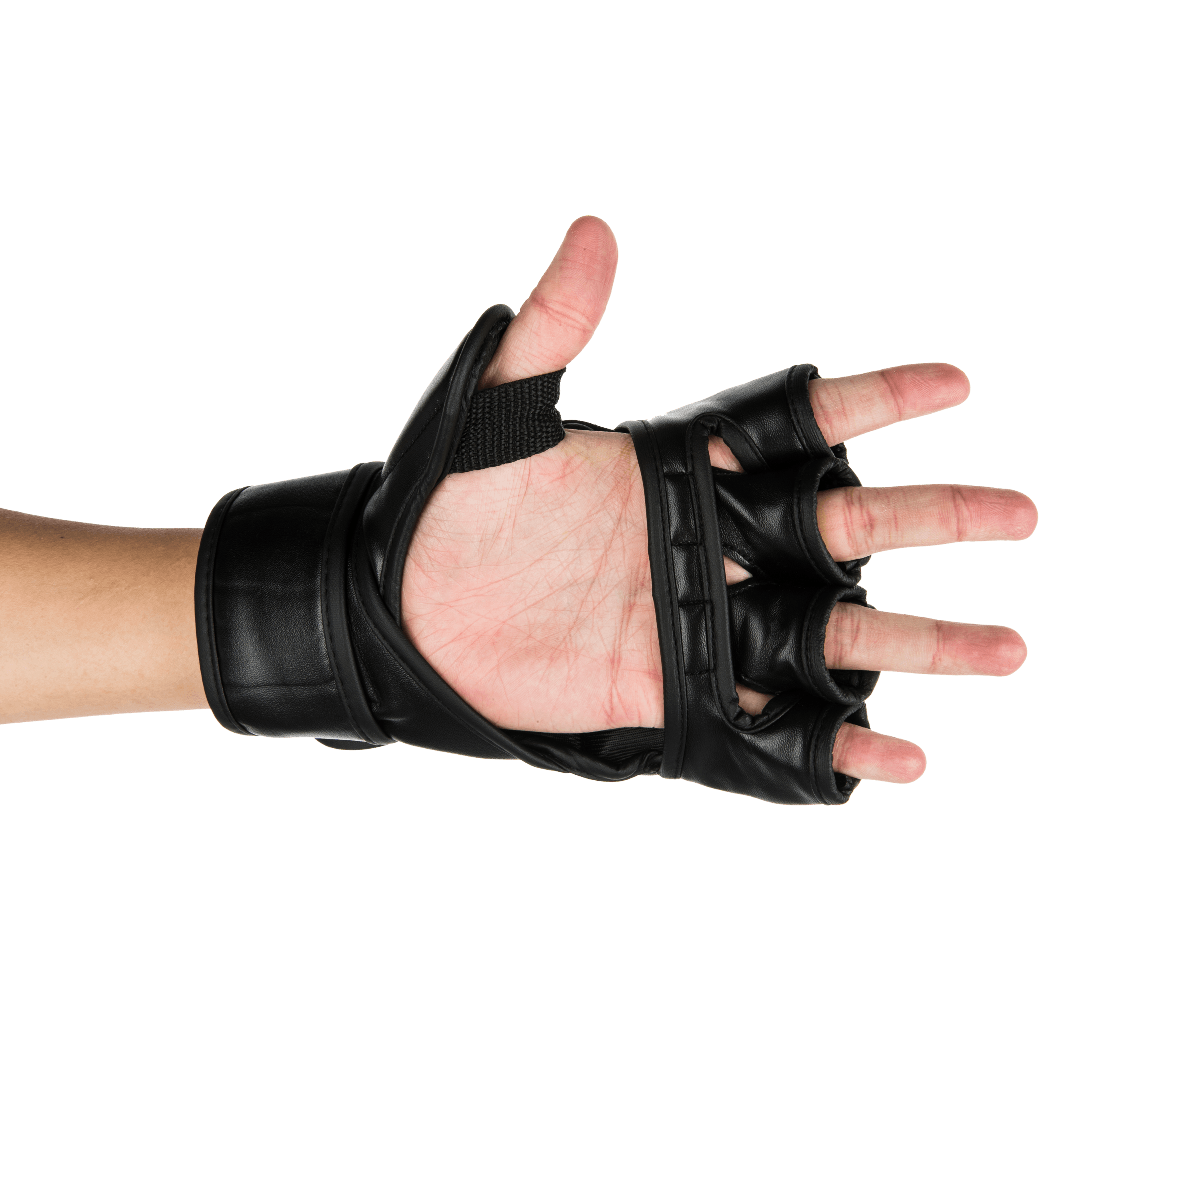 UFC MMA 7oz Grappling Gloves - UFC Equipment MMA and Boxing Gear Spirit Combat Sports